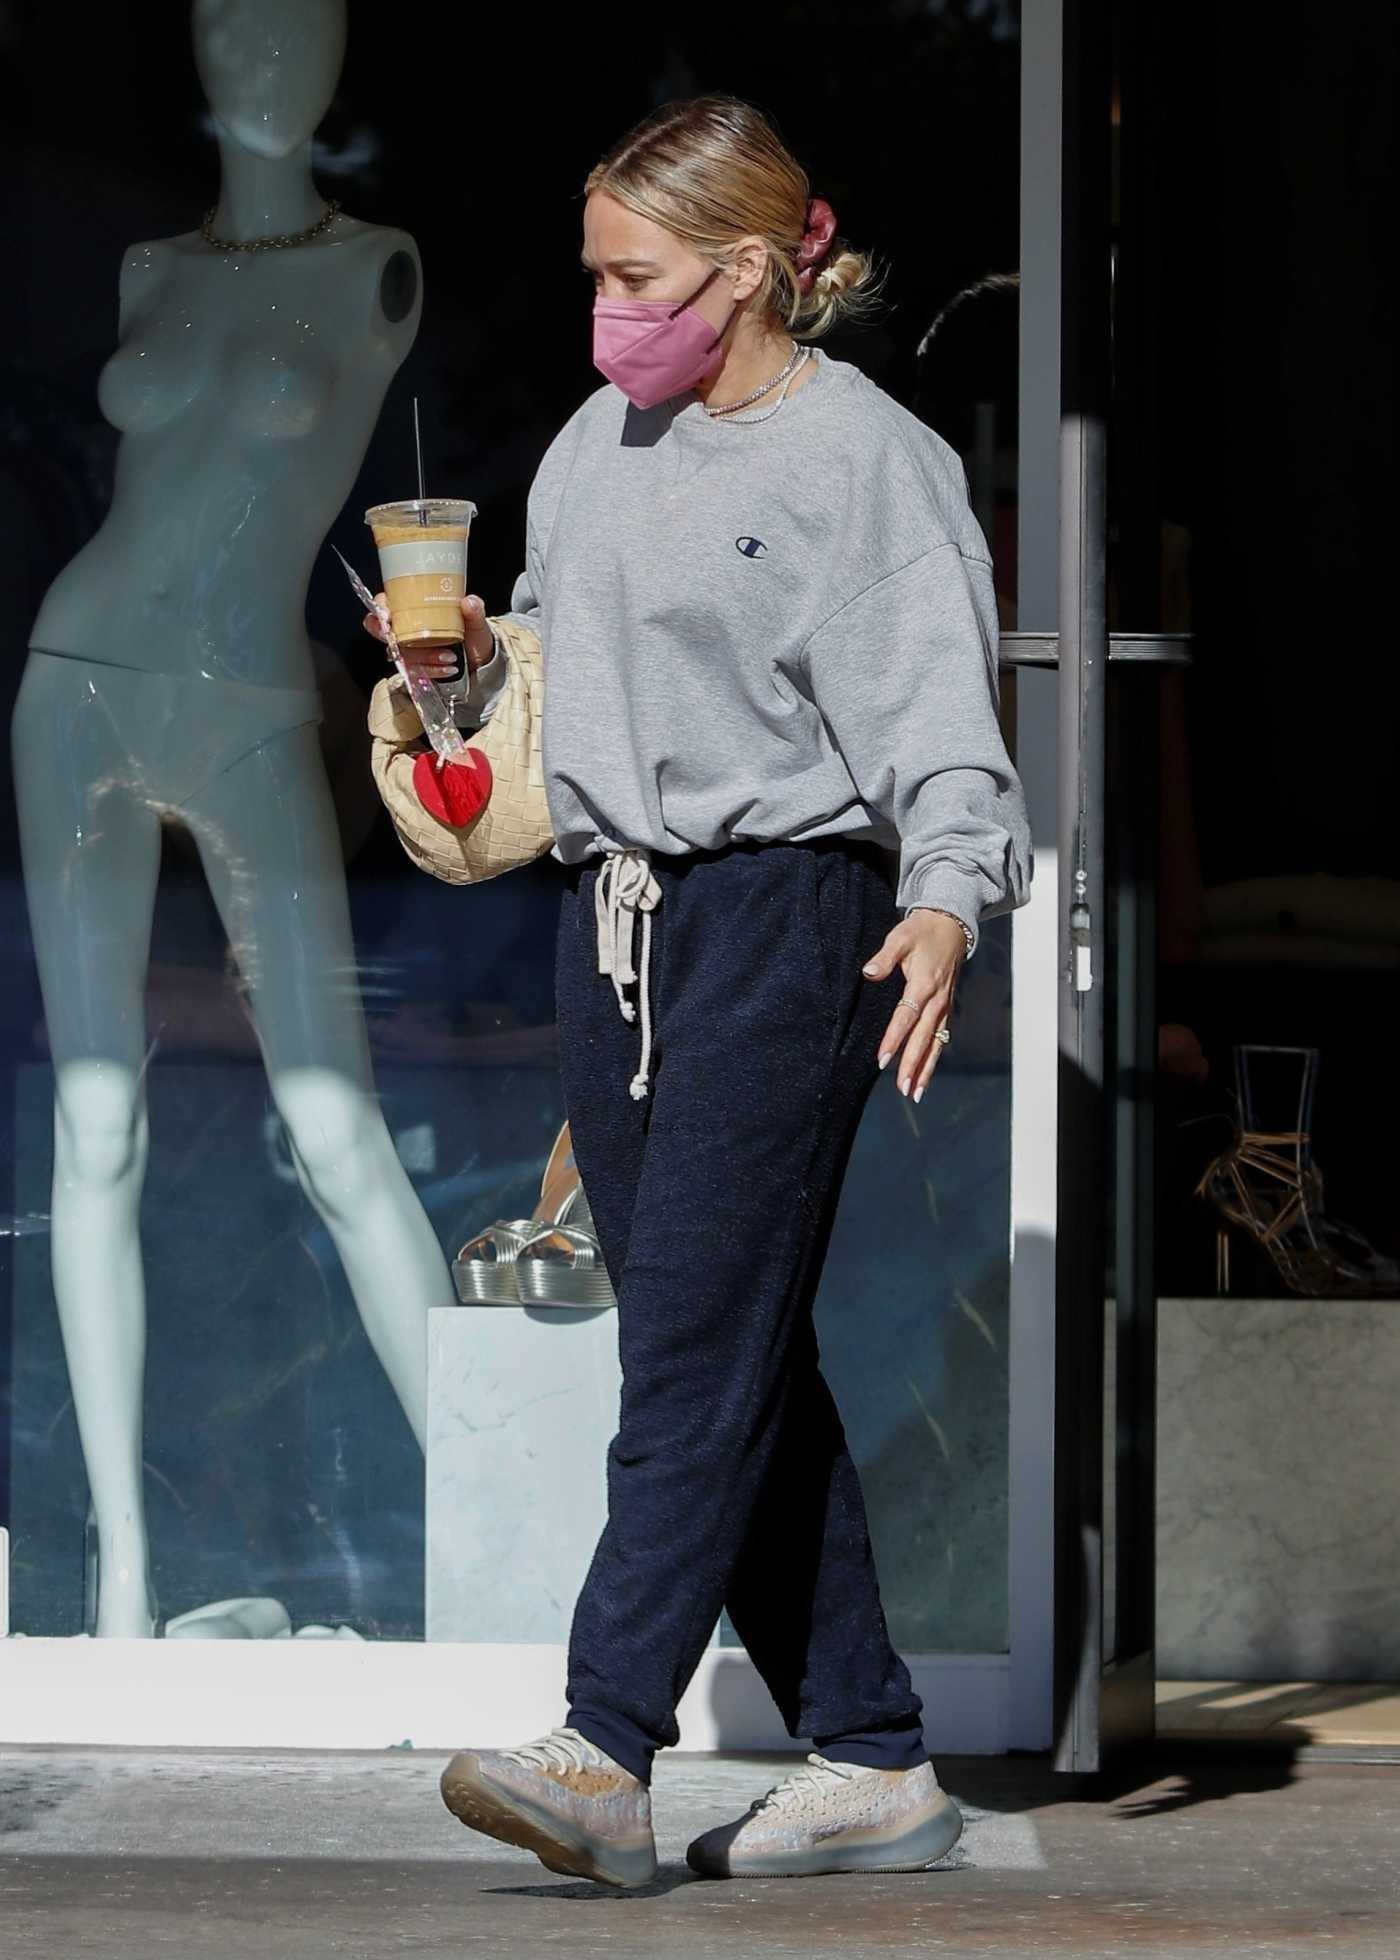 Hilary Duff in a Grey Sweatshirt Was Seen Out in Los Angeles 02/23/2022